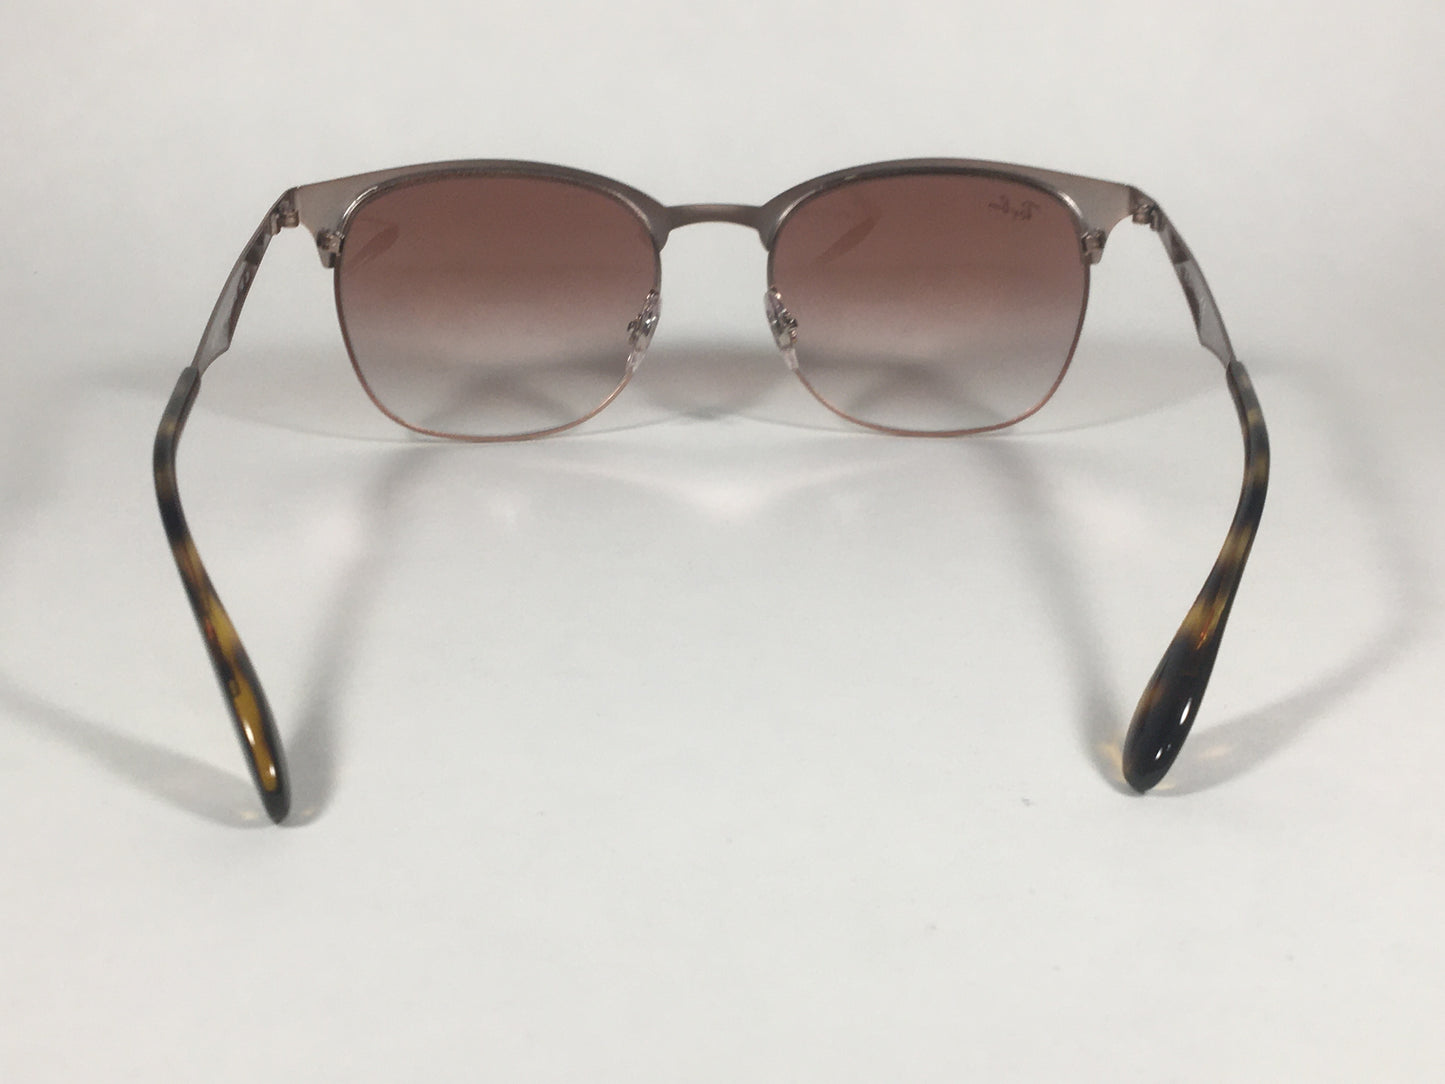 Ray-Ban Clubmaster Sunglasses Copper Havana Frame Red Gradient Lens RB3538 9074/V0 - Sunglasses